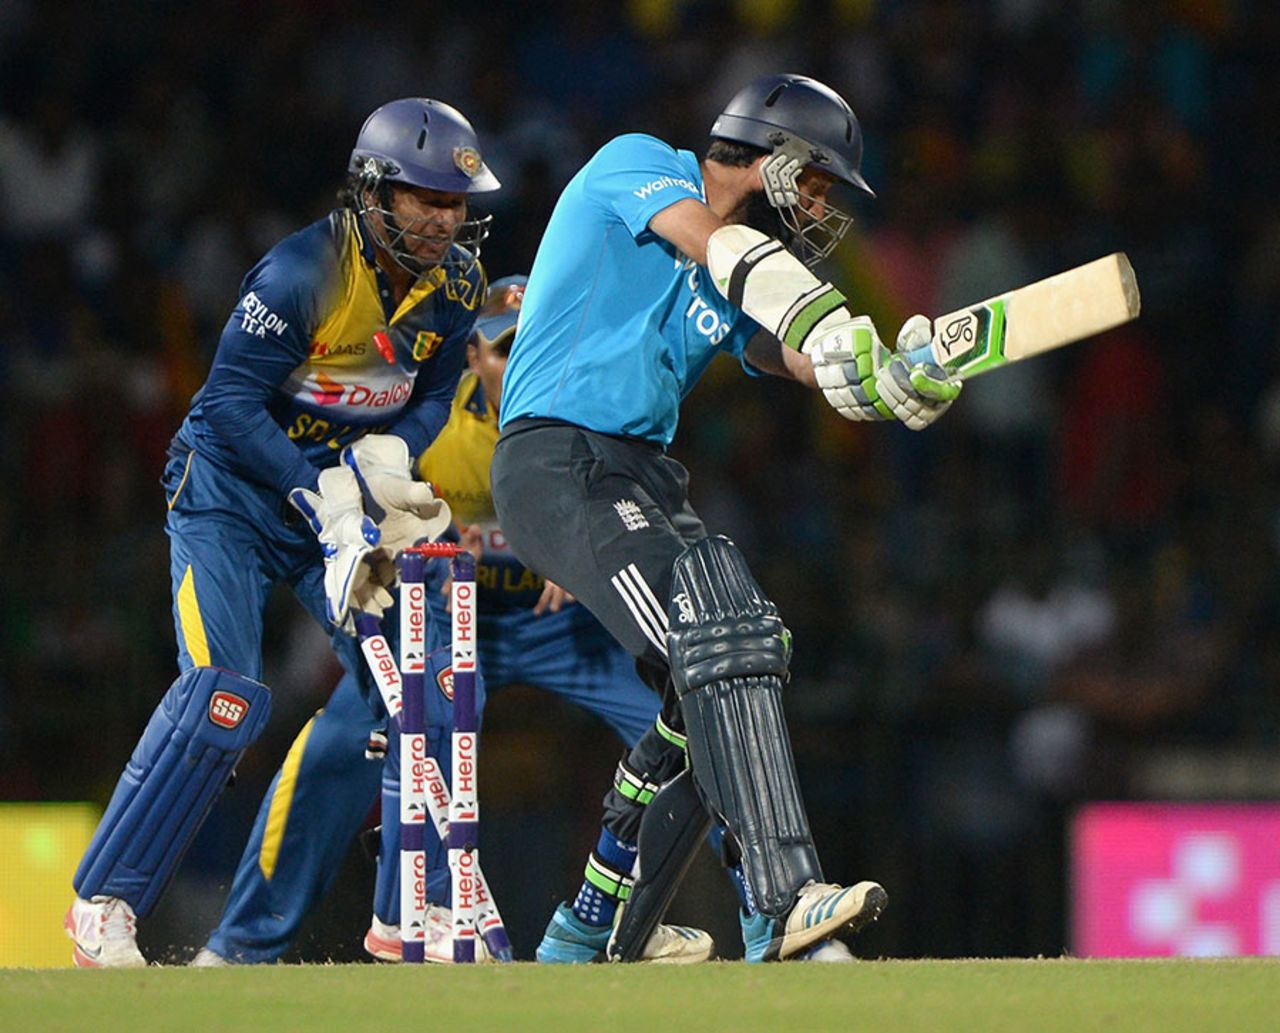 Moeen Ali was bowled first ball, Sri Lanka v England, 7th ODI, Colombo, December 16, 2014